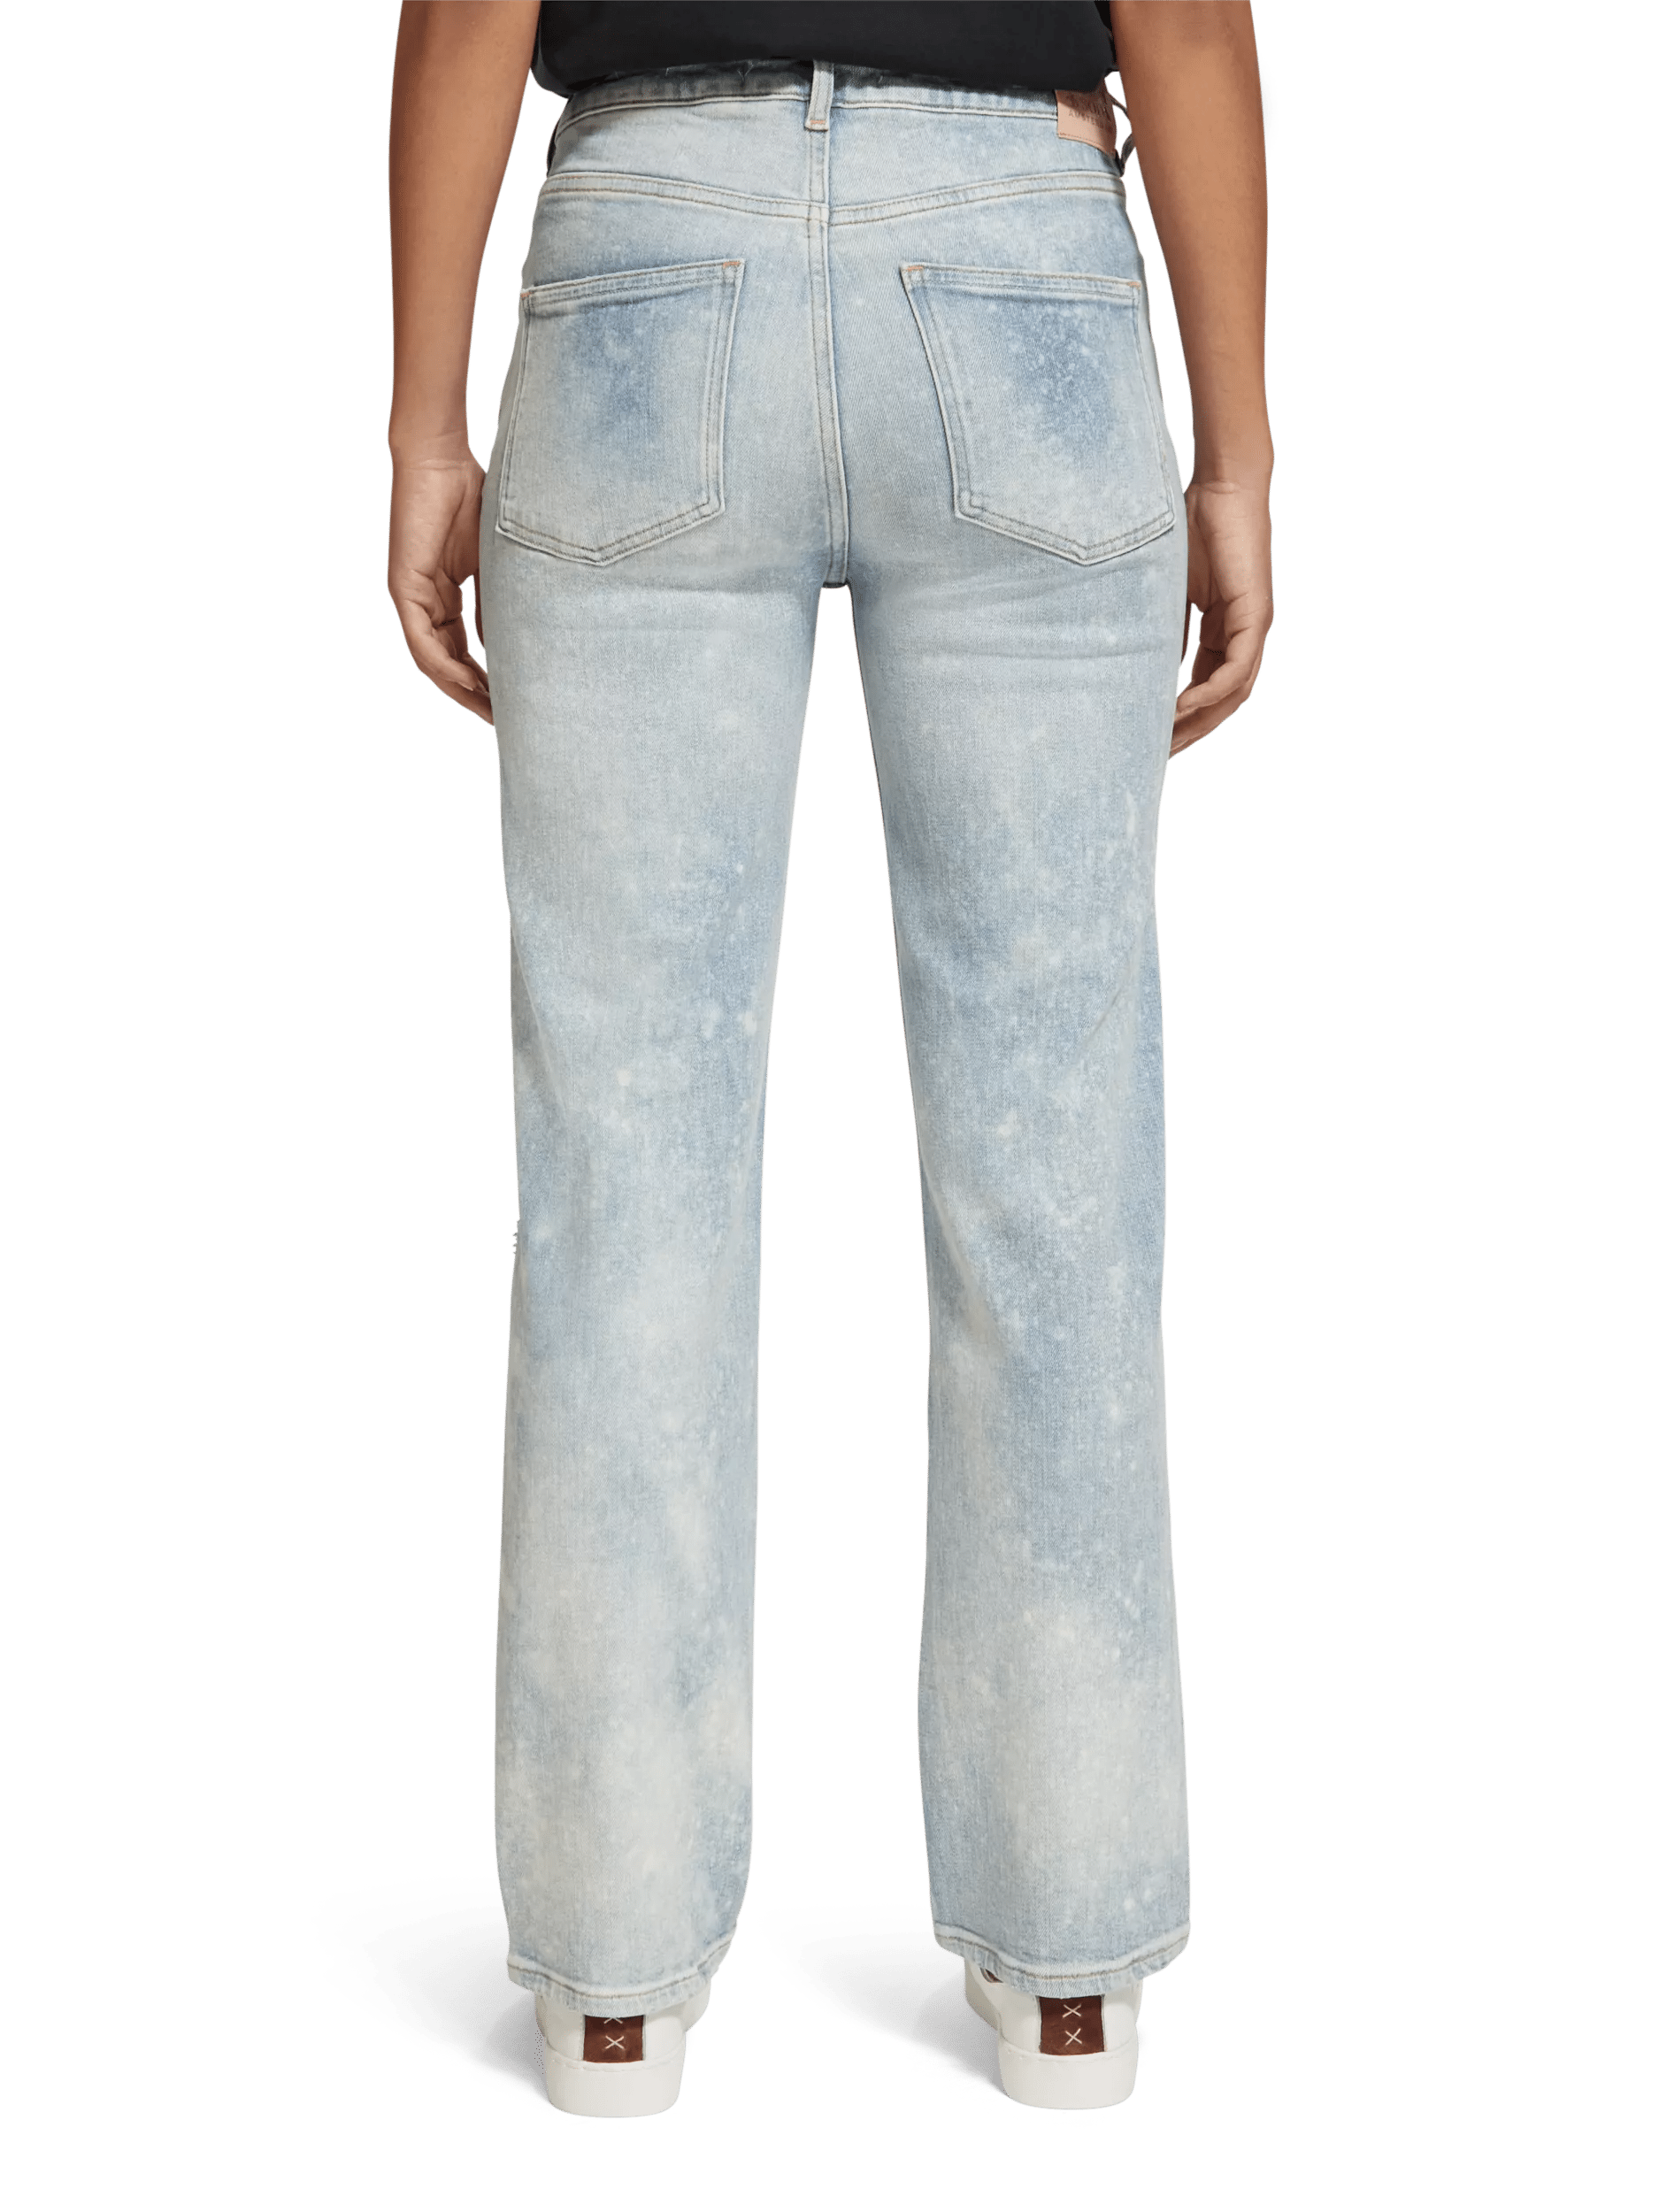 Scotch & Soda De Sky high-rise jeans met rechte pijpen FIT-BCK